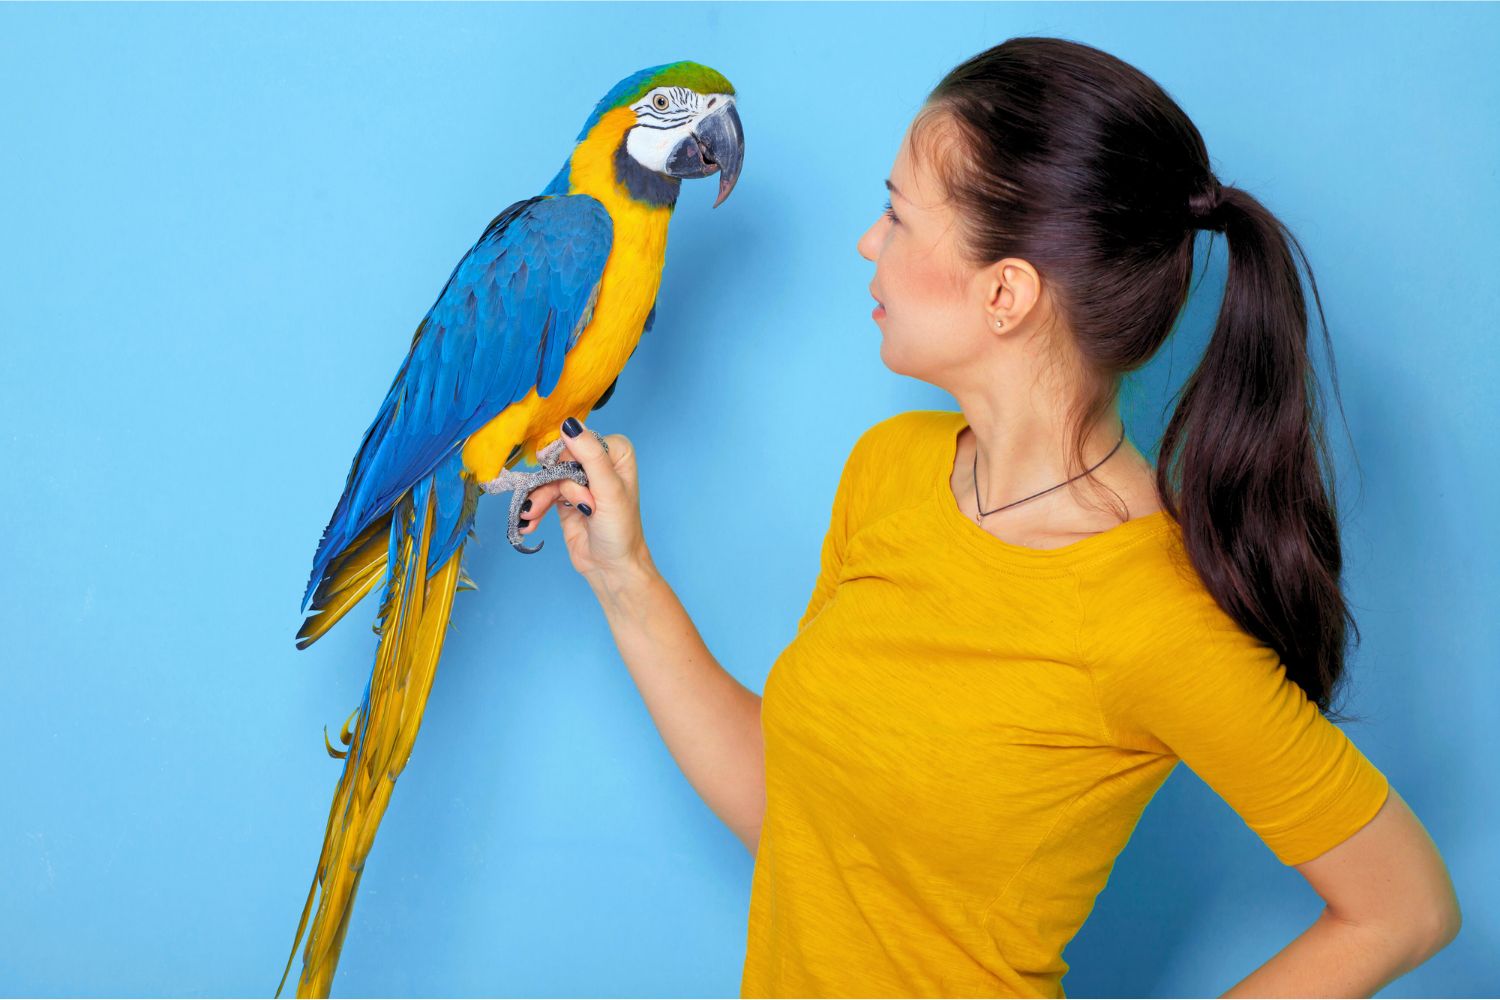 7. Some macaws can mimic human speech